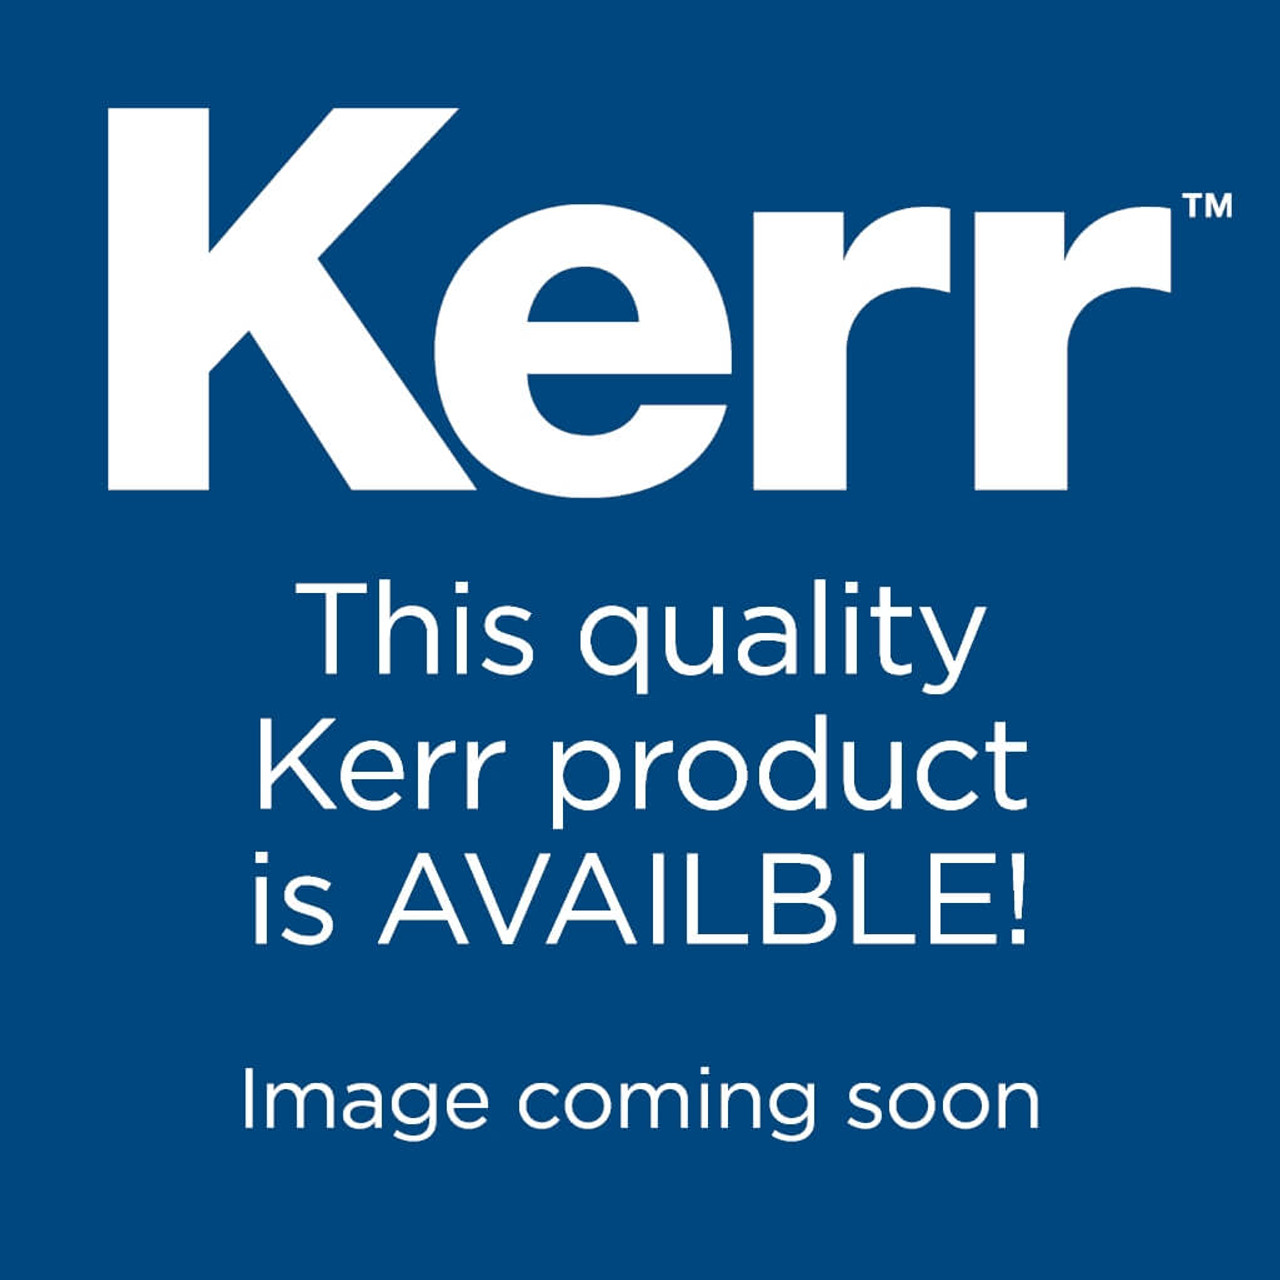 Autofit Backfill Gutta Percha - Size M, 972-0022, Kerr Dental